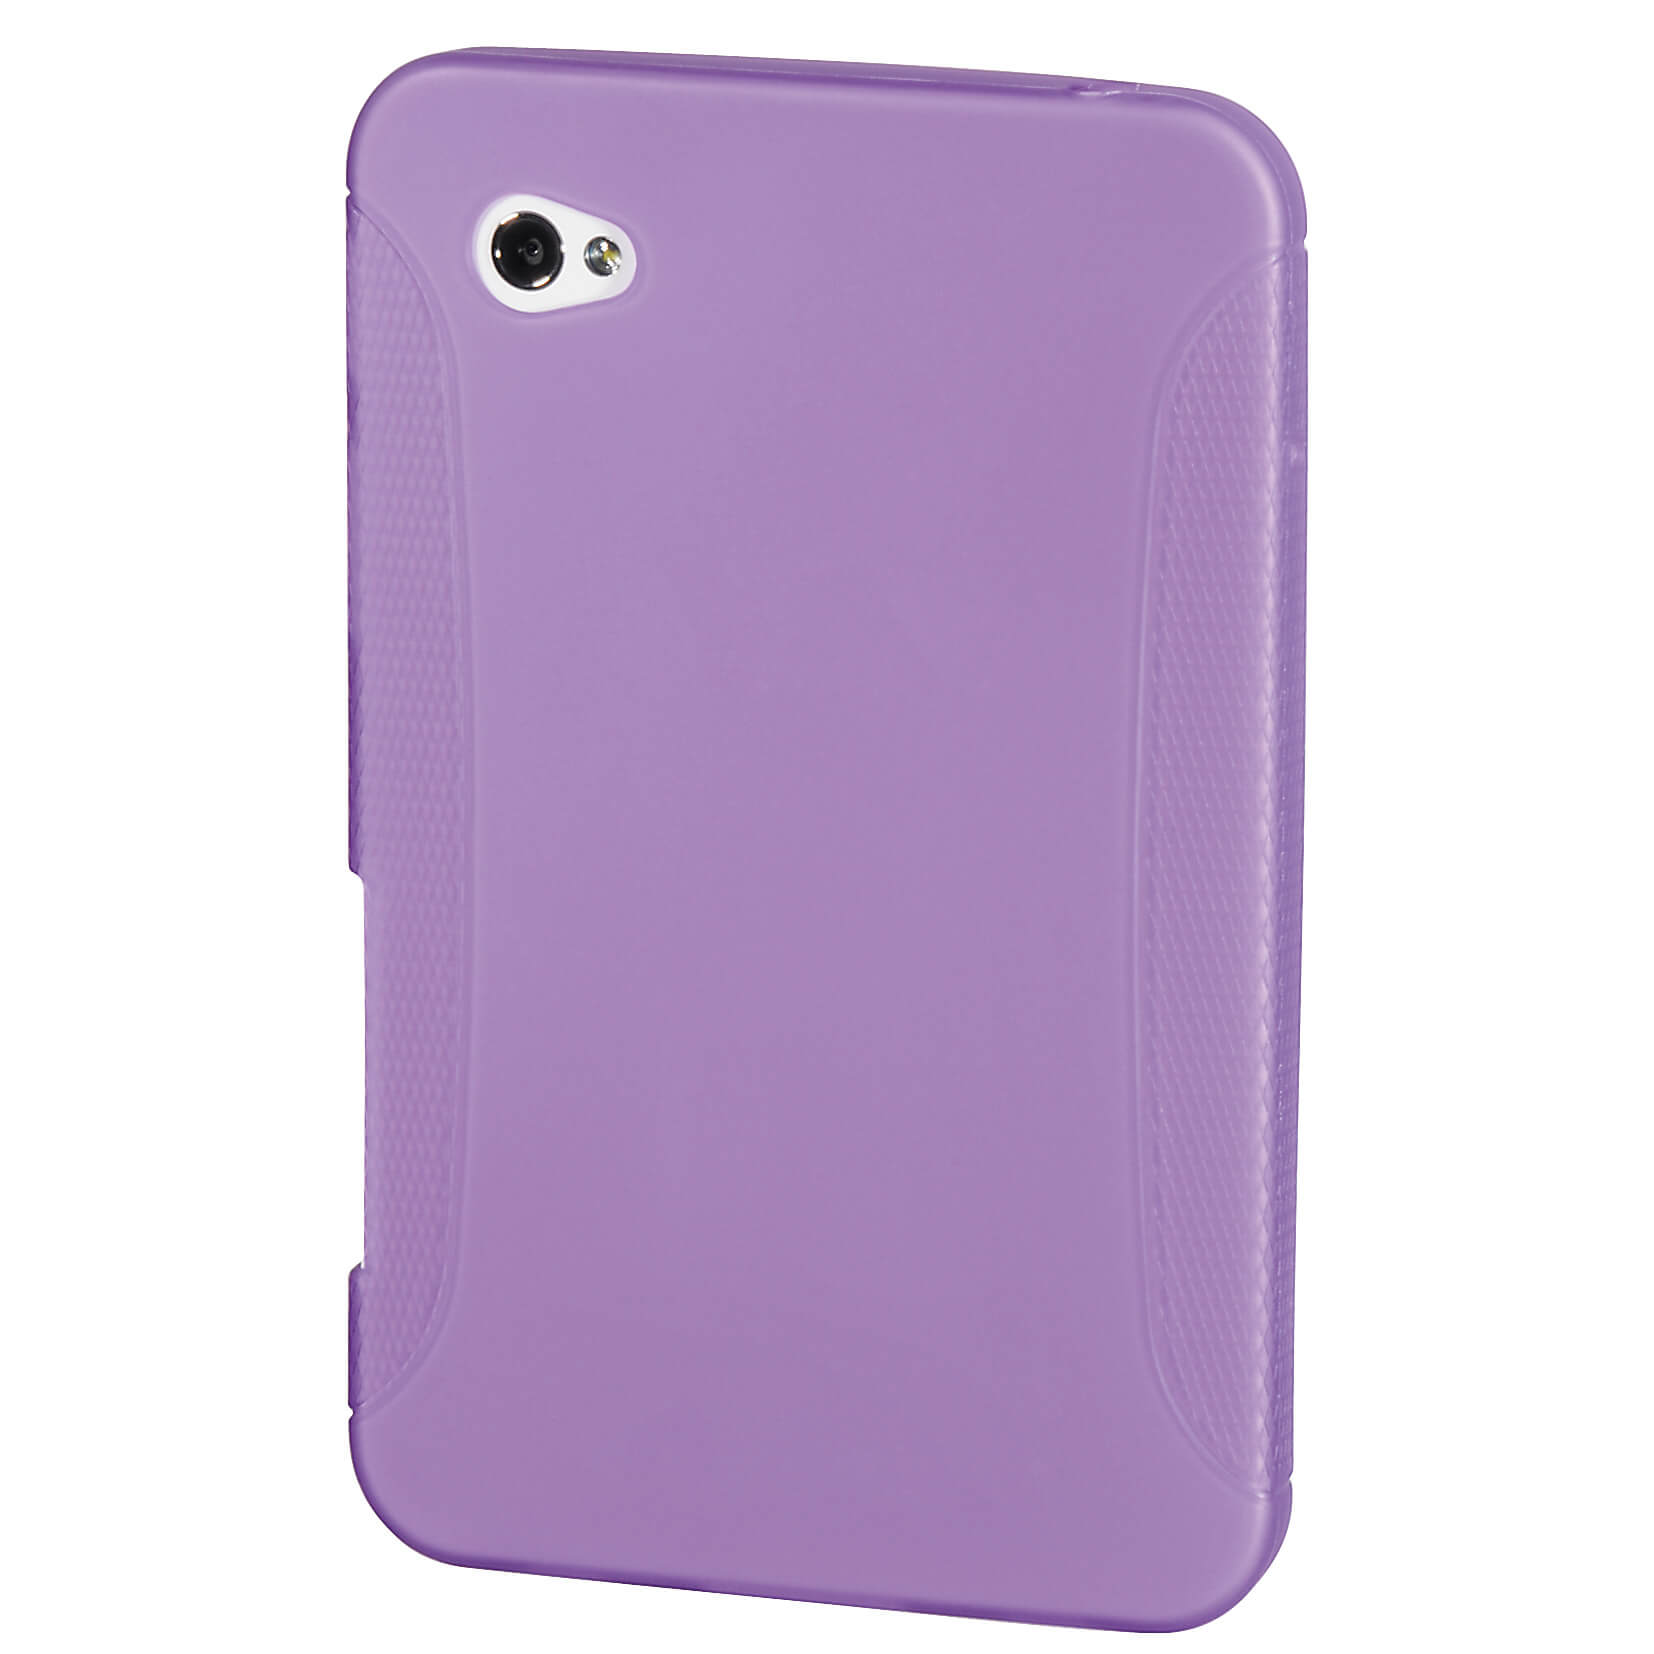 Cover TPU for Samsung Galaxy Tab, purple